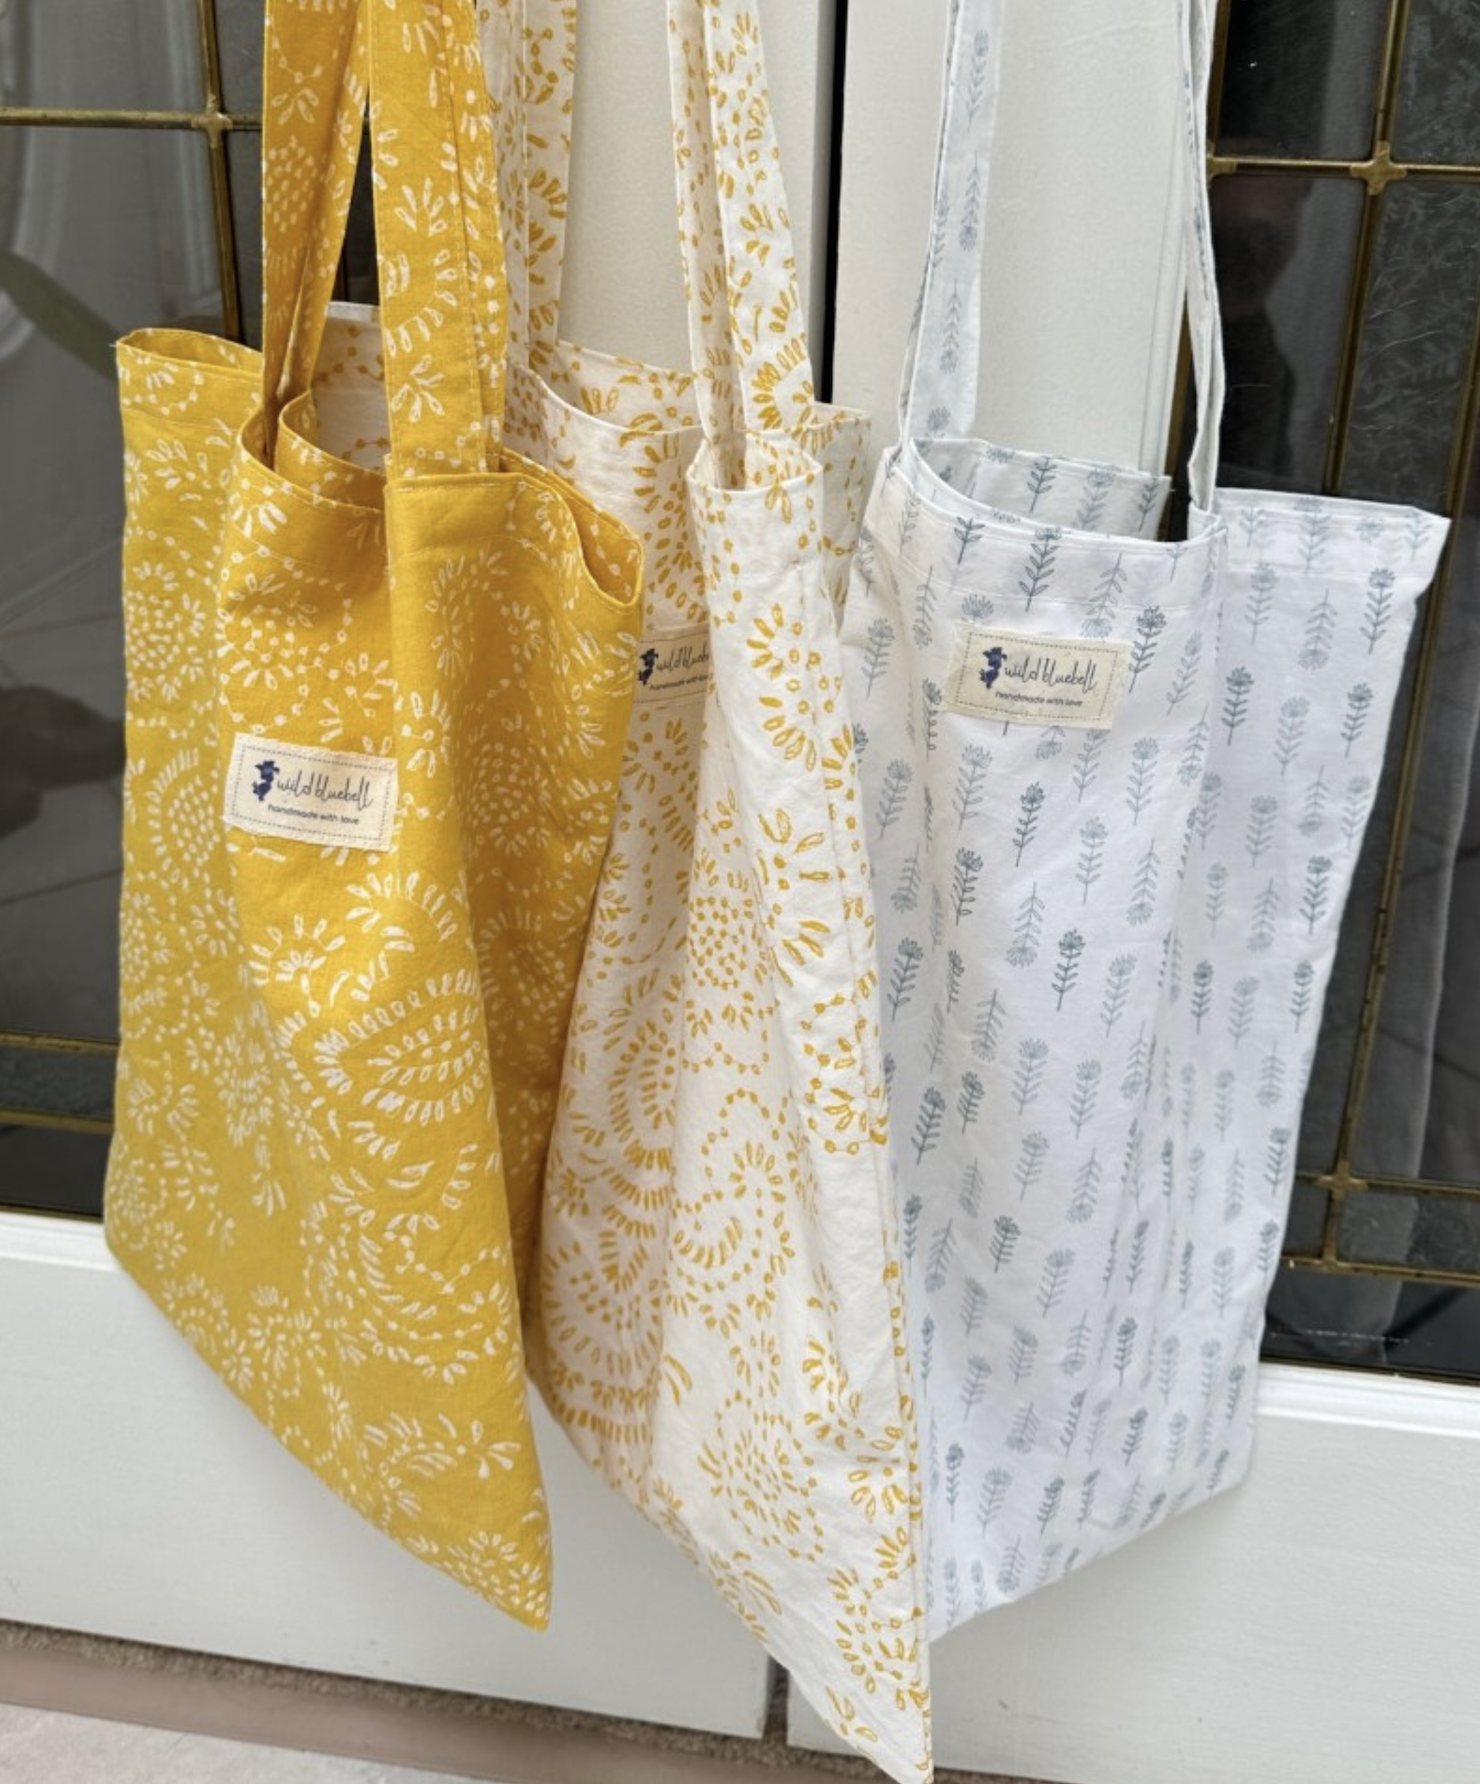 Handmade fabric bag designs/DIY fabric bag designs. - YouTube